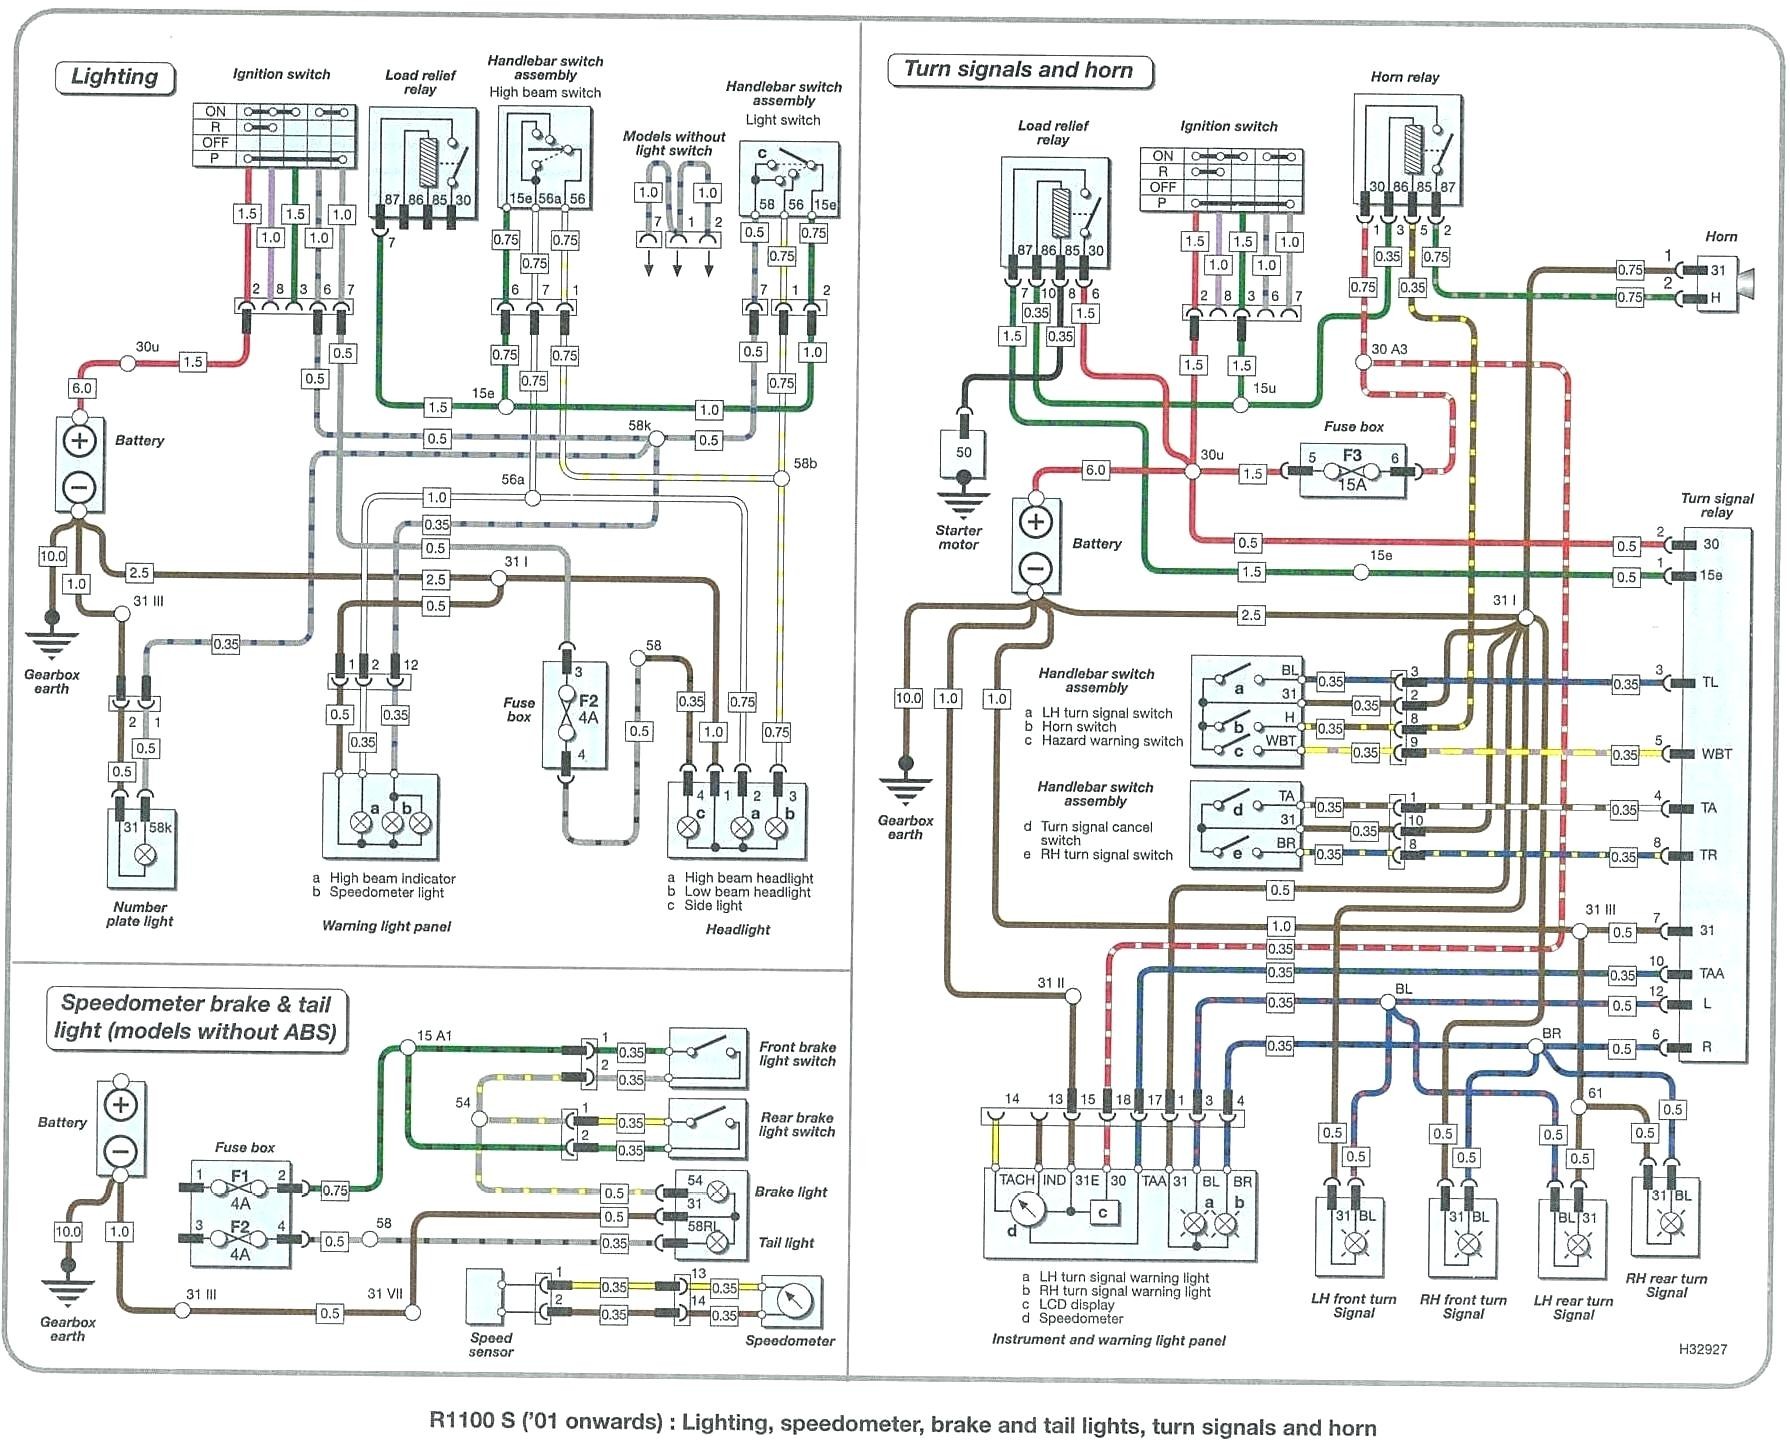 2000 Mitsubishi Eclipse Engine Diagram 2000 Bmw 323i Wiring Diagram Wiring Diagram Of 2000 Mitsubishi Eclipse Engine Diagram